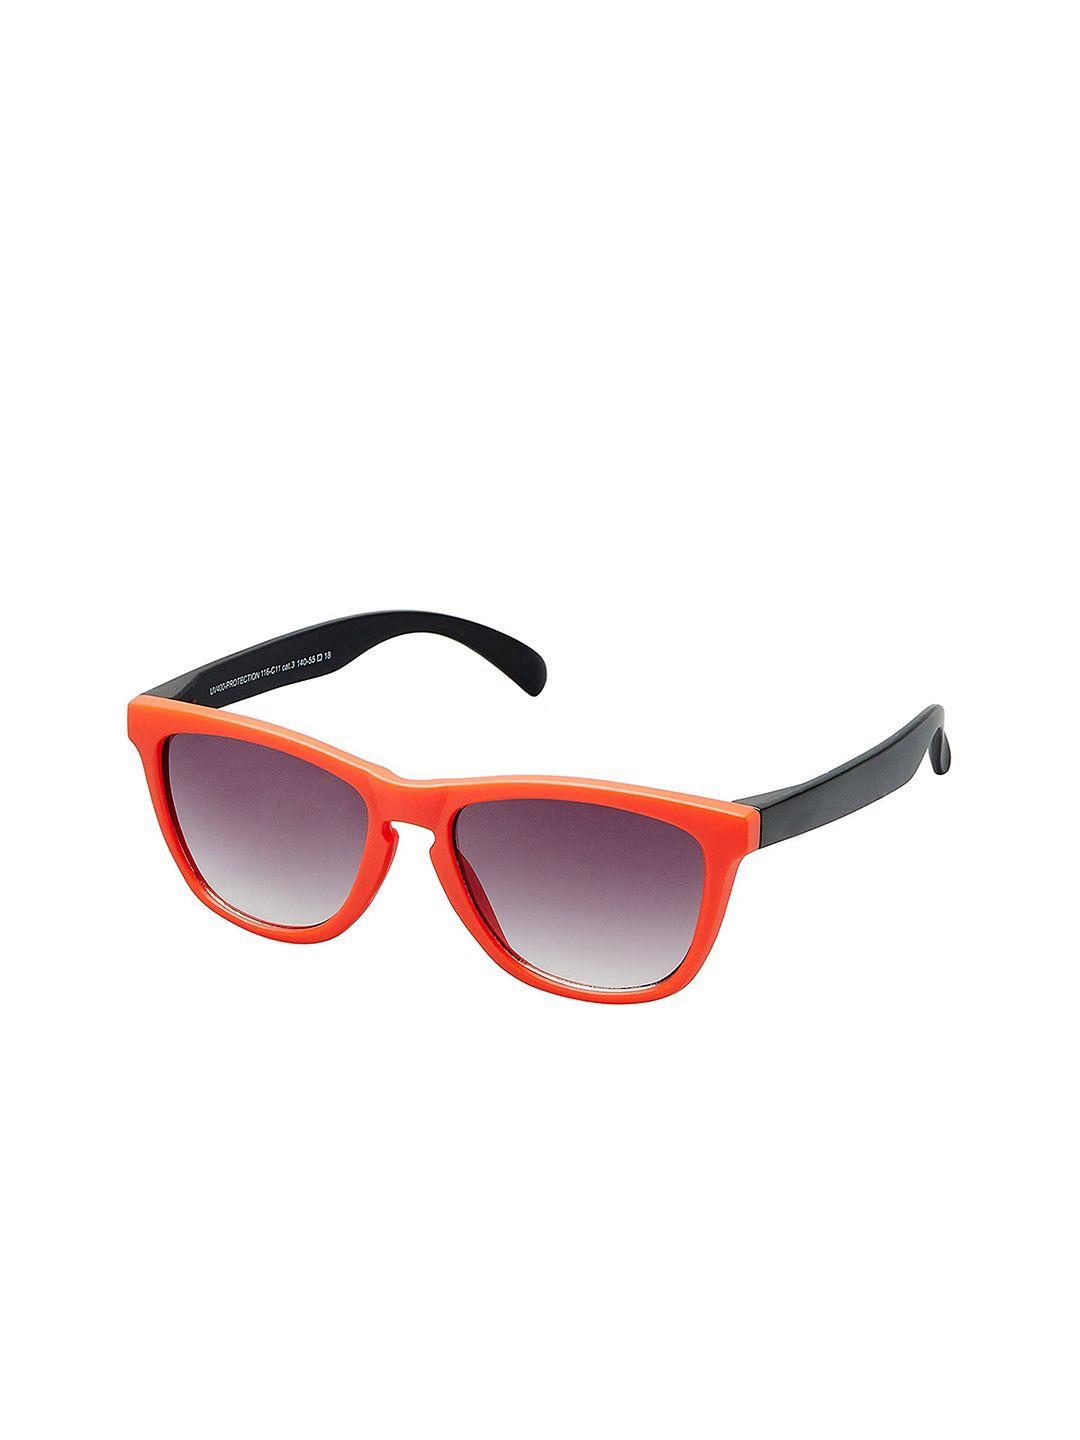 roadies lens & square sunglasses with uv protected lens rdnm-116-c11